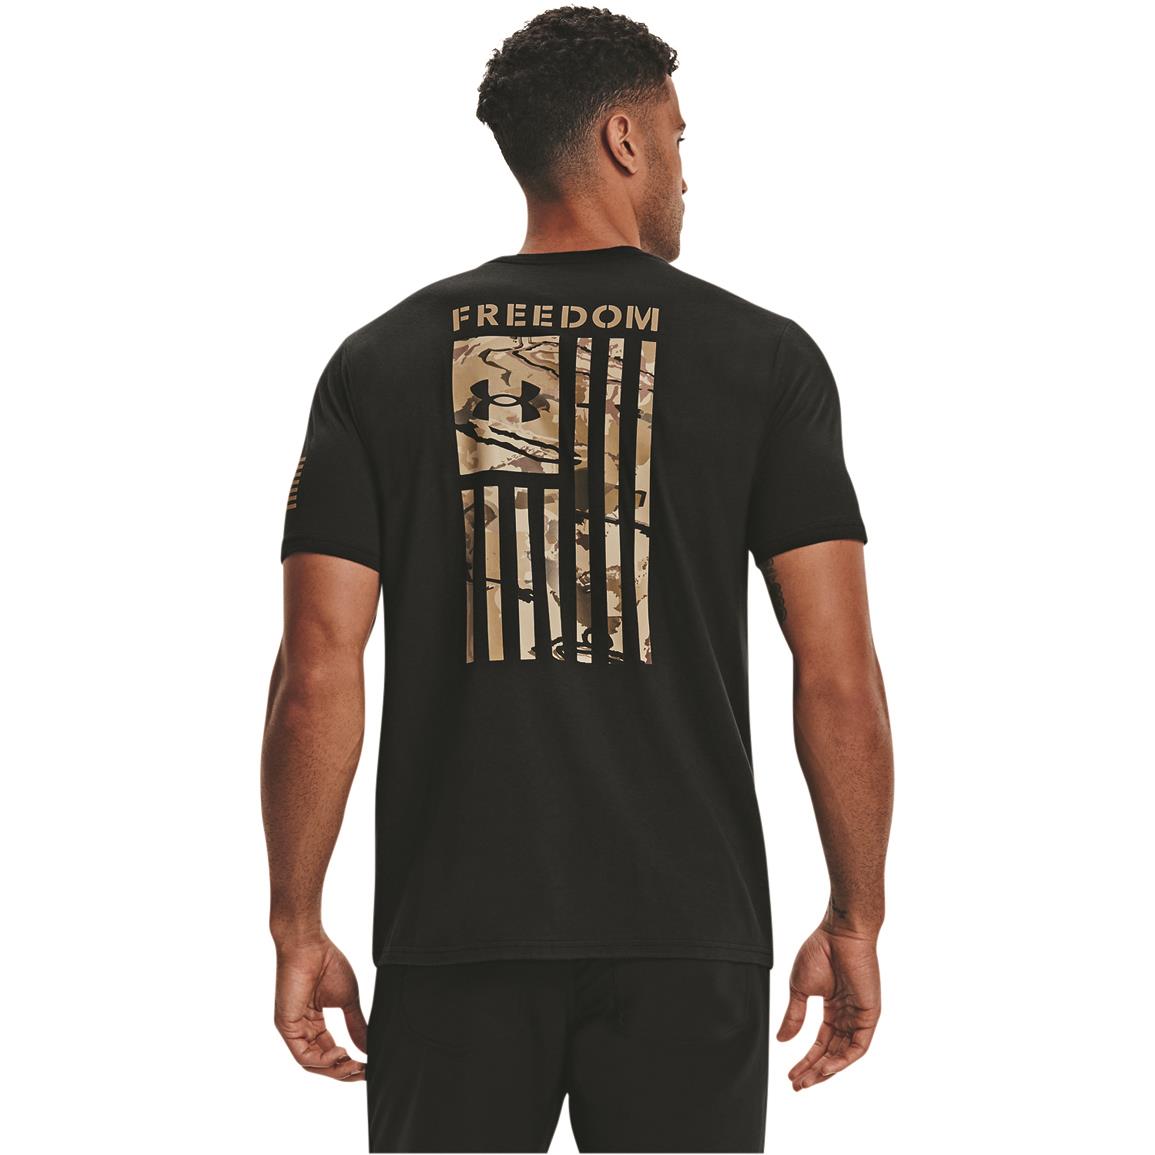 Under Armour Men's Freedom Flag Camo Shirt, Black/desert Sand